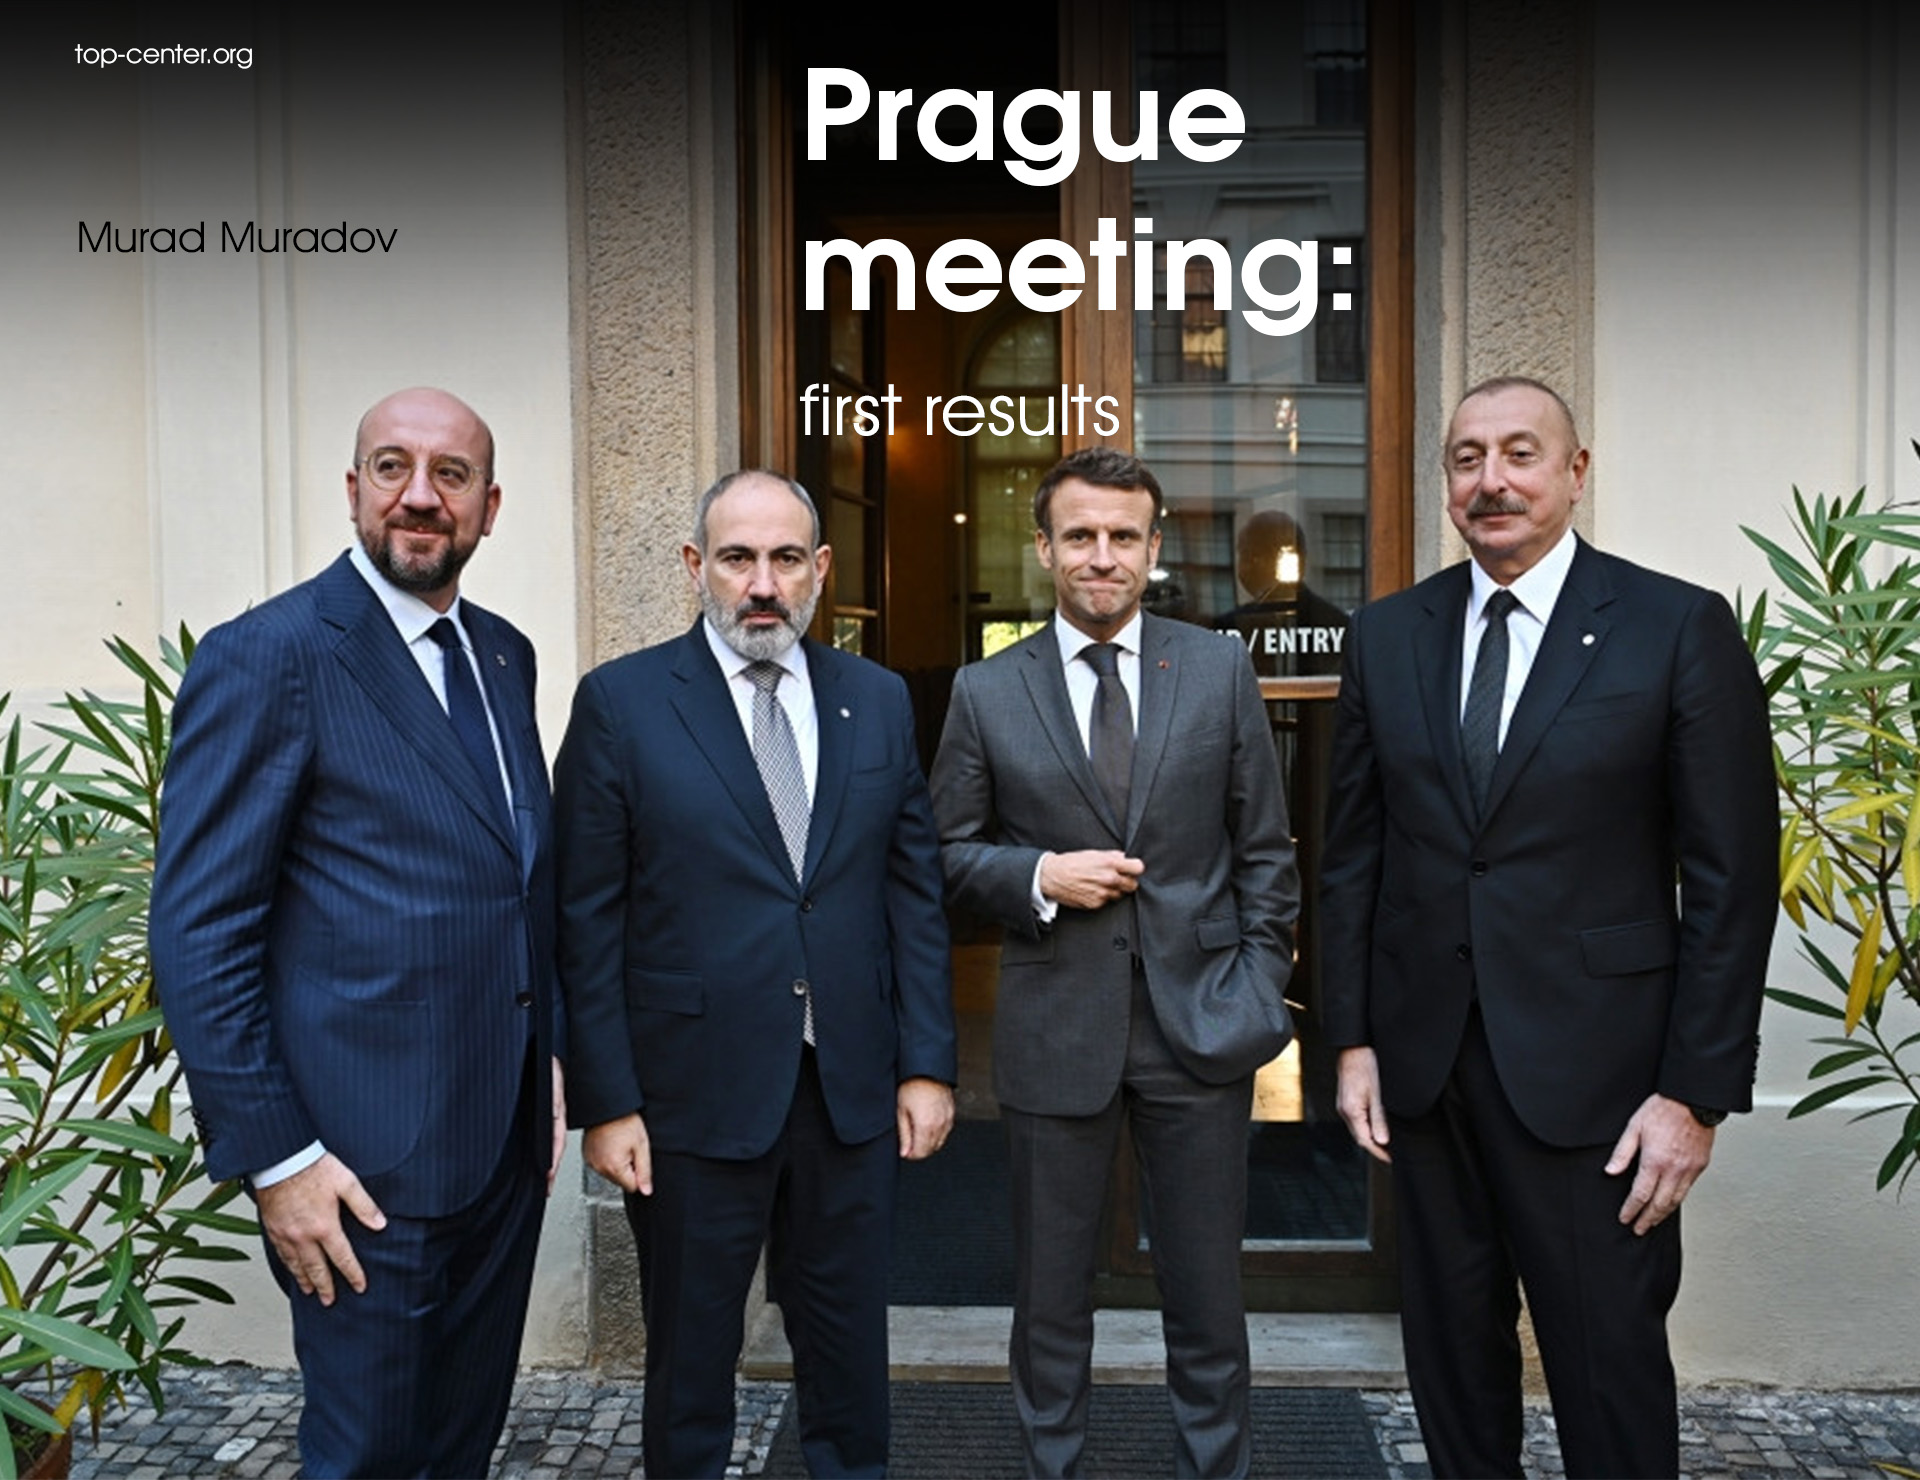 Prague meeting: first results